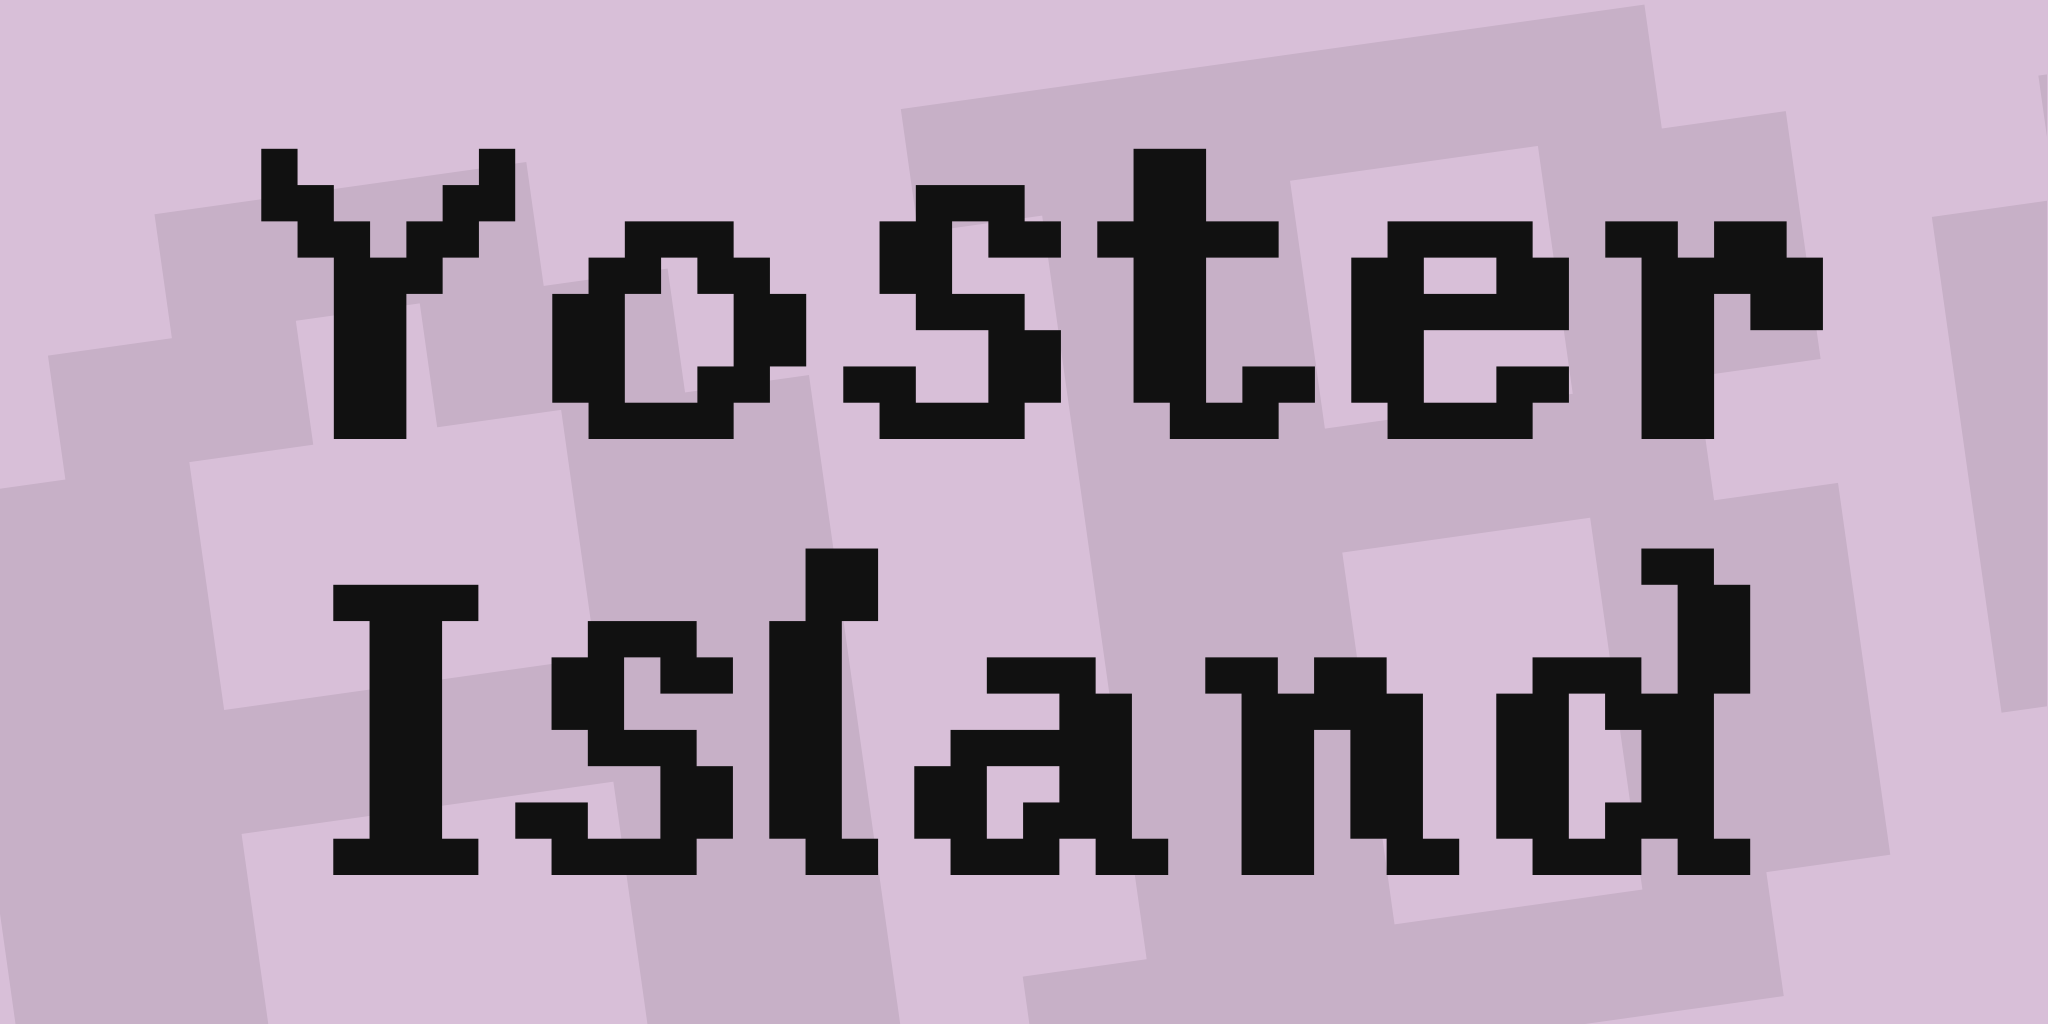 Yoster Island